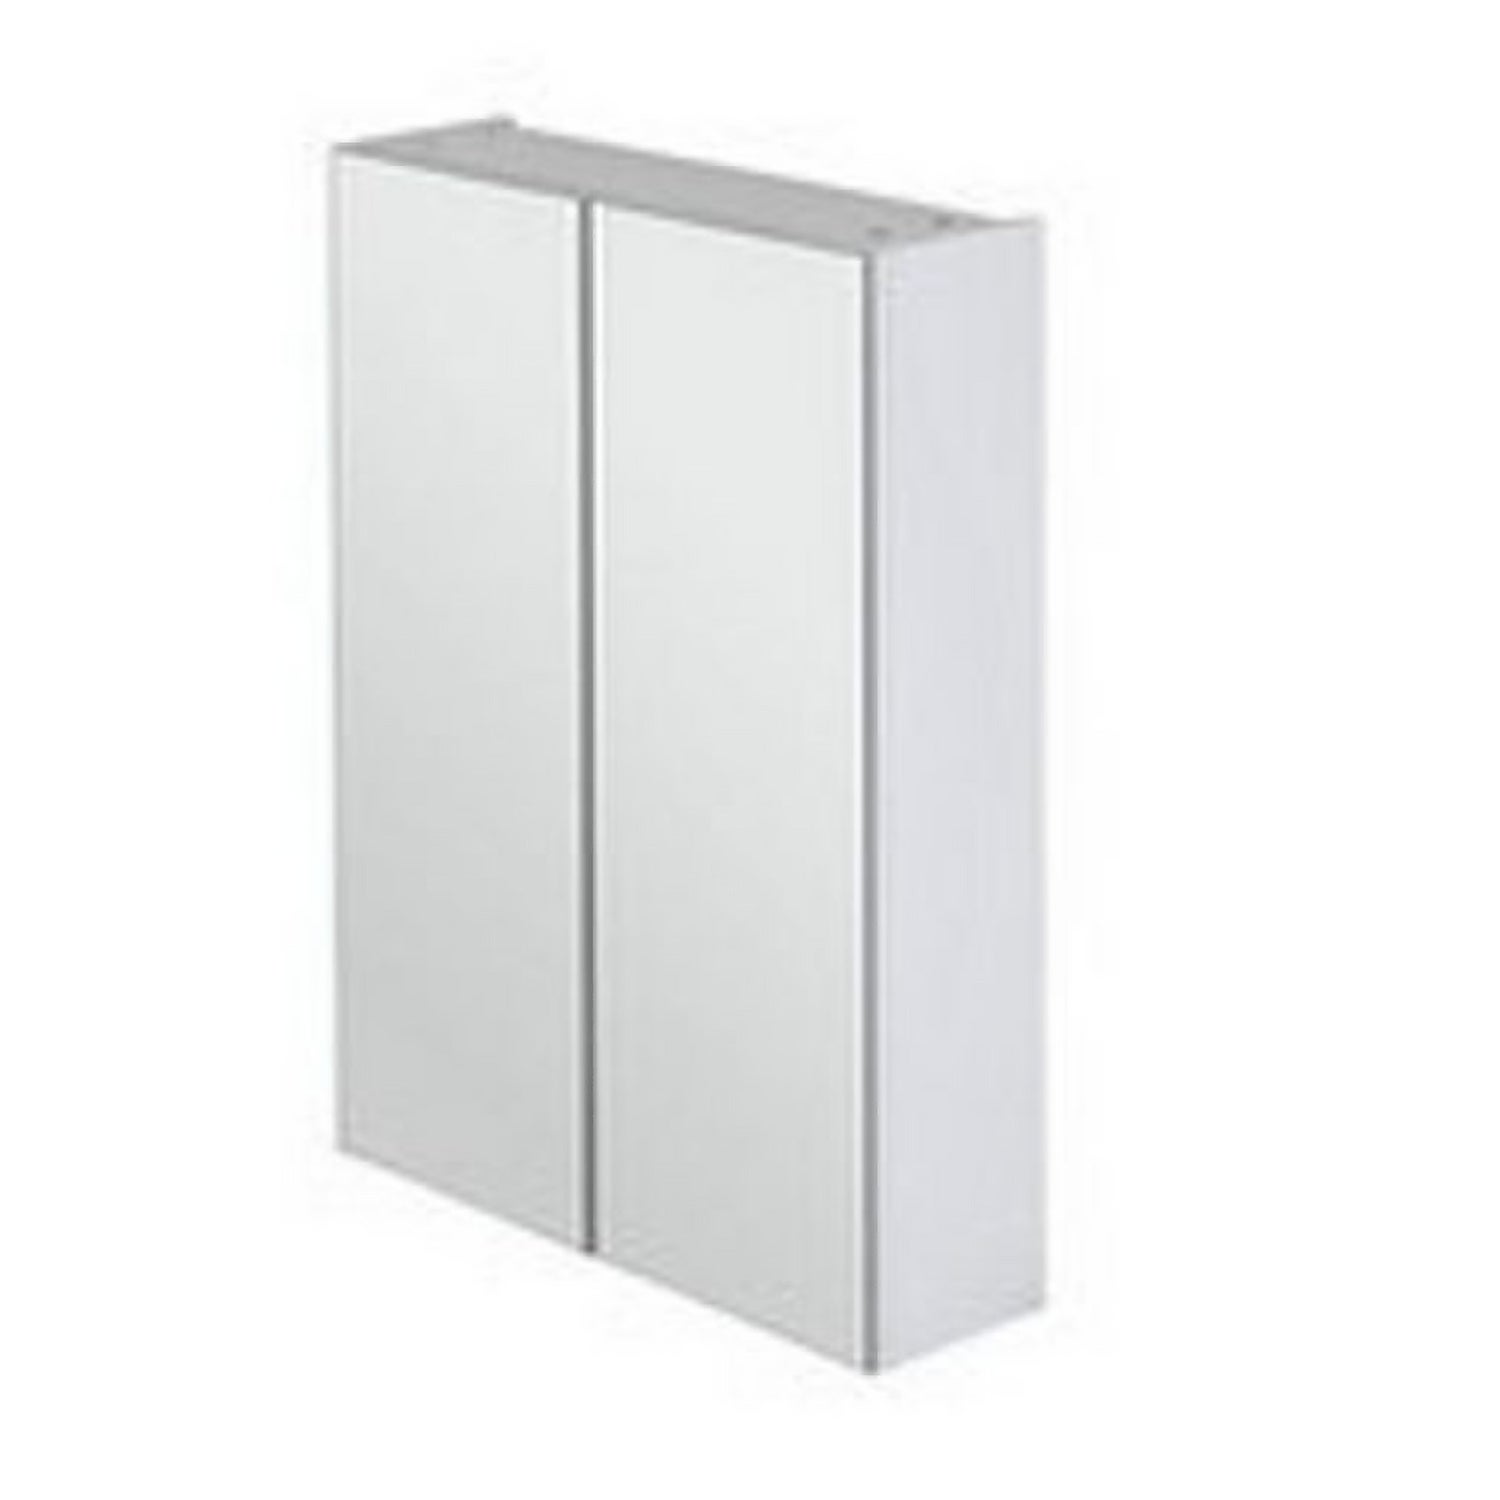 MyPlan 600mm Mirrored Cabinet - Arctic White